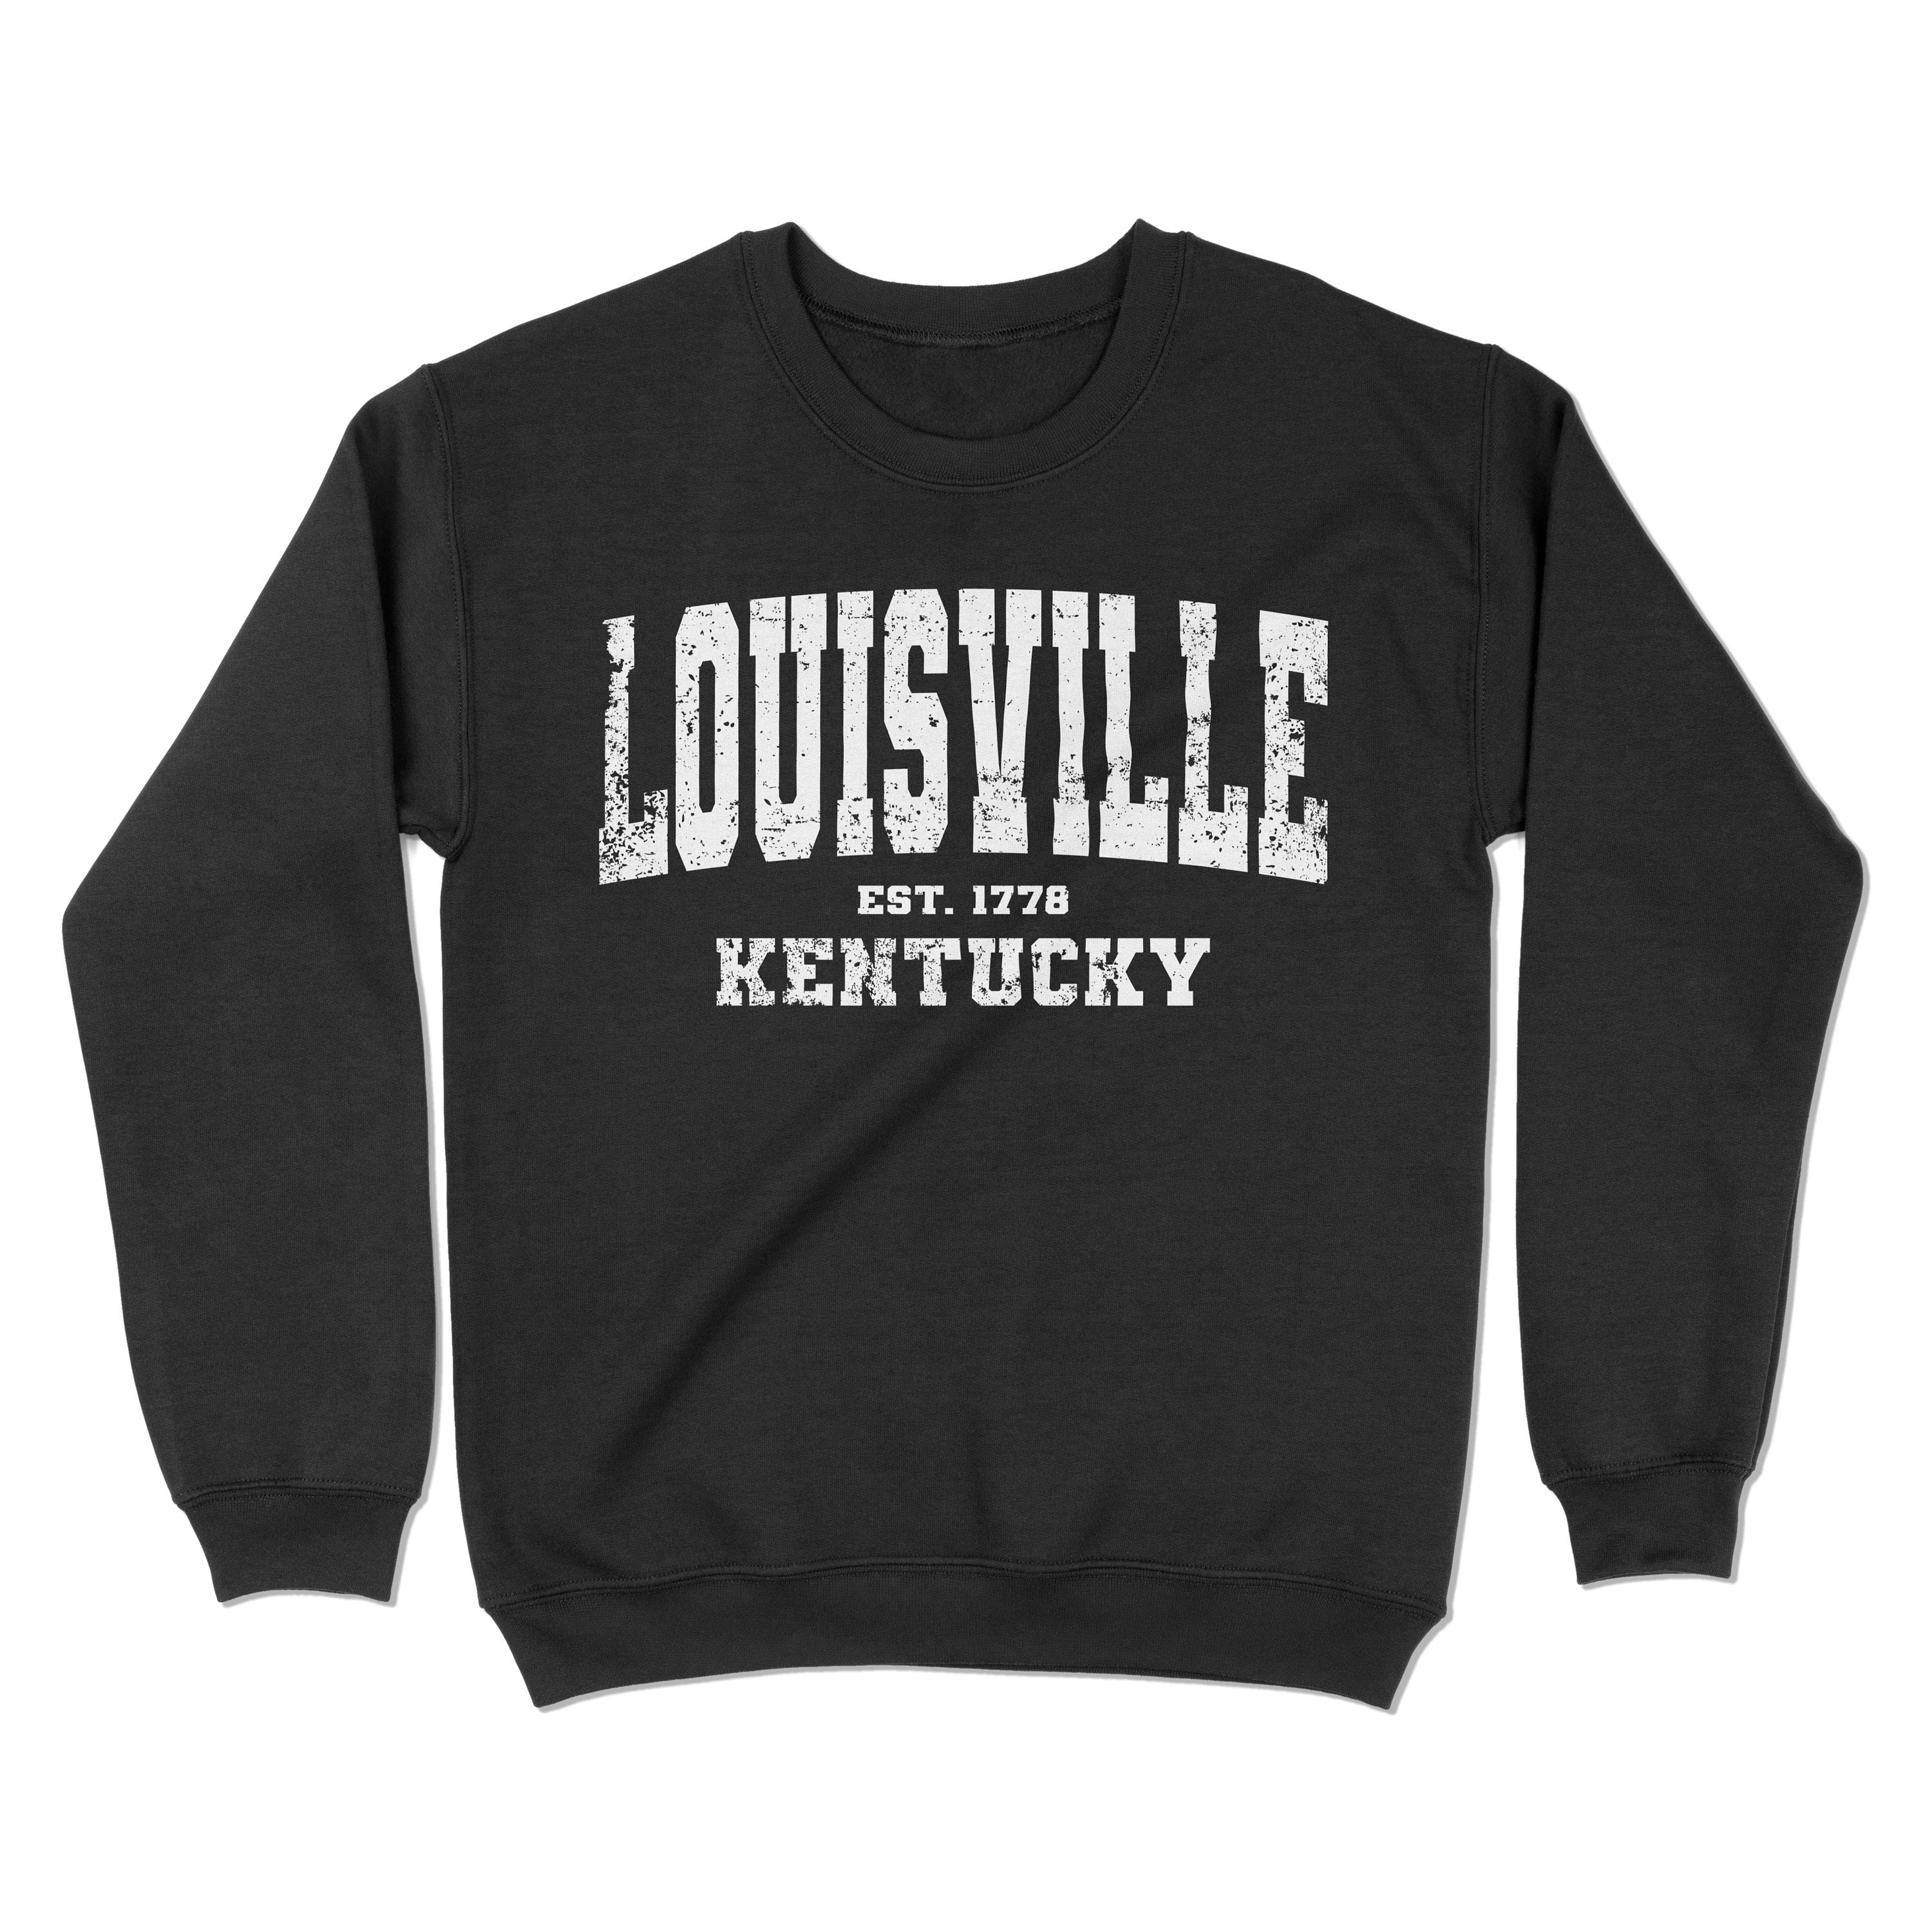  Louisville Kentucky KY Gifts Souvenirs Men Women Kids CIty  Sweatshirt : Clothing, Shoes & Jewelry